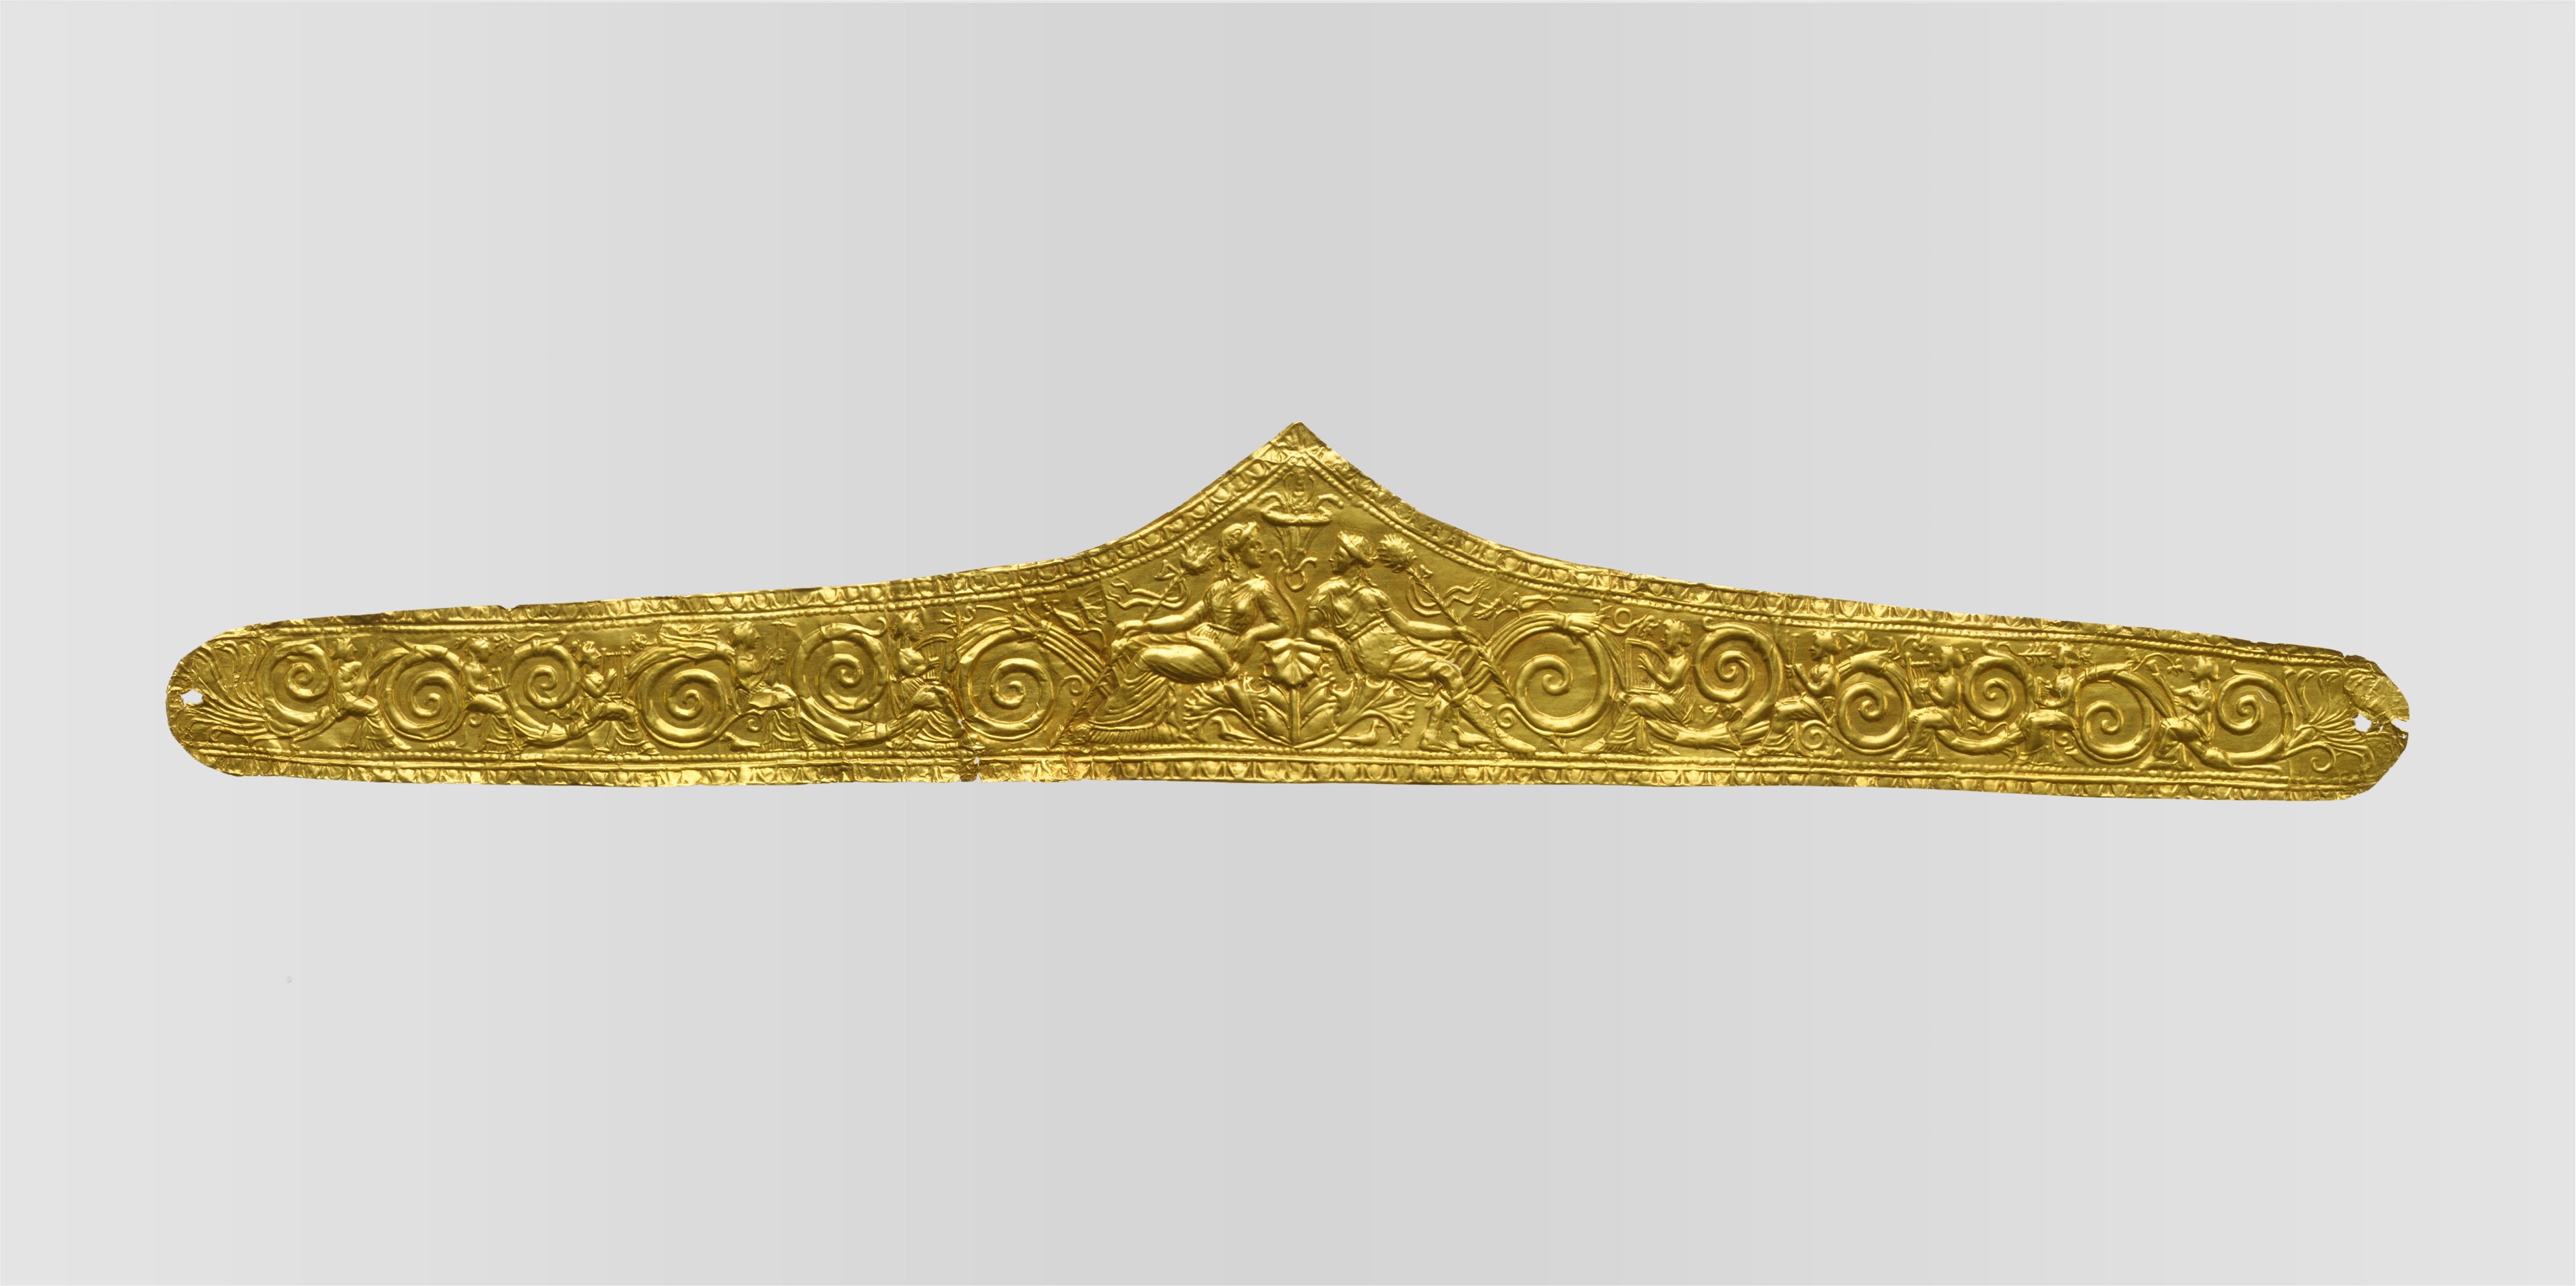 Pediment-shaped gold diadem, Greek, Hellenistic